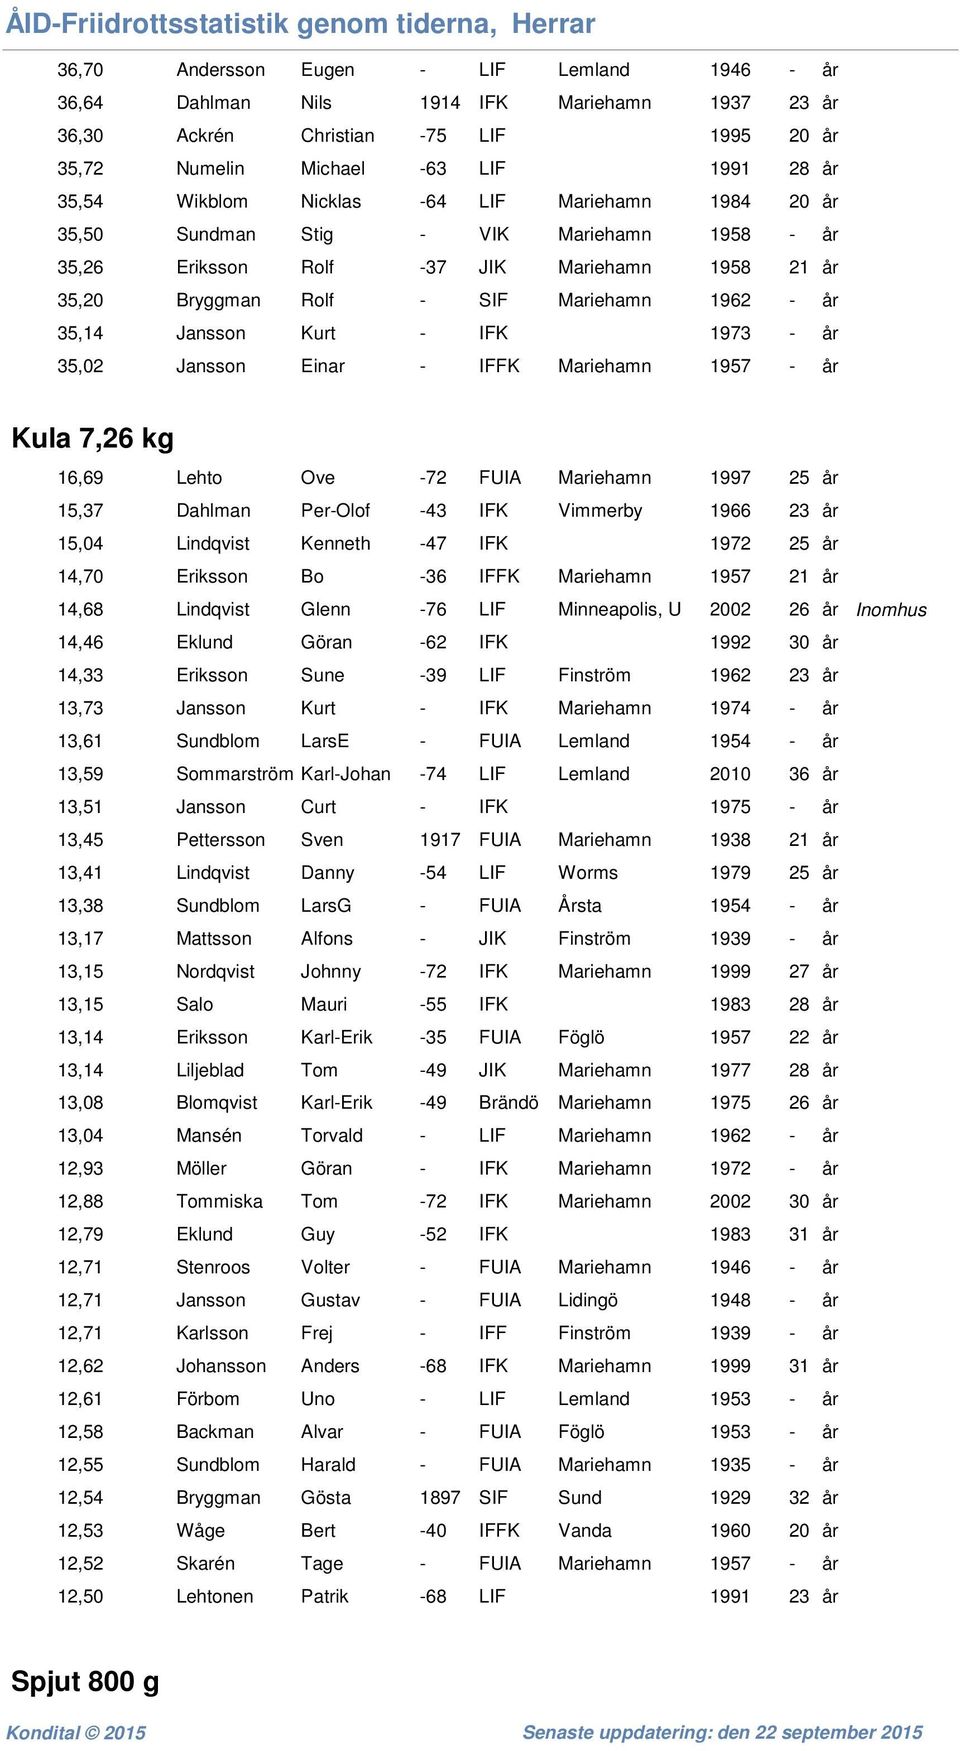 - år 35,02 Jansson Einar - IFFK Mariehamn 1957 - år Kula 7,26 kg 16,69 Lehto Ove -72 FUIA Mariehamn 1997 25 år 15,37 Dahlman Per-Olof -43 IFK Vimmerby 1966 23 år 15,04 Lindqvist Kenneth -47 IFK 1972